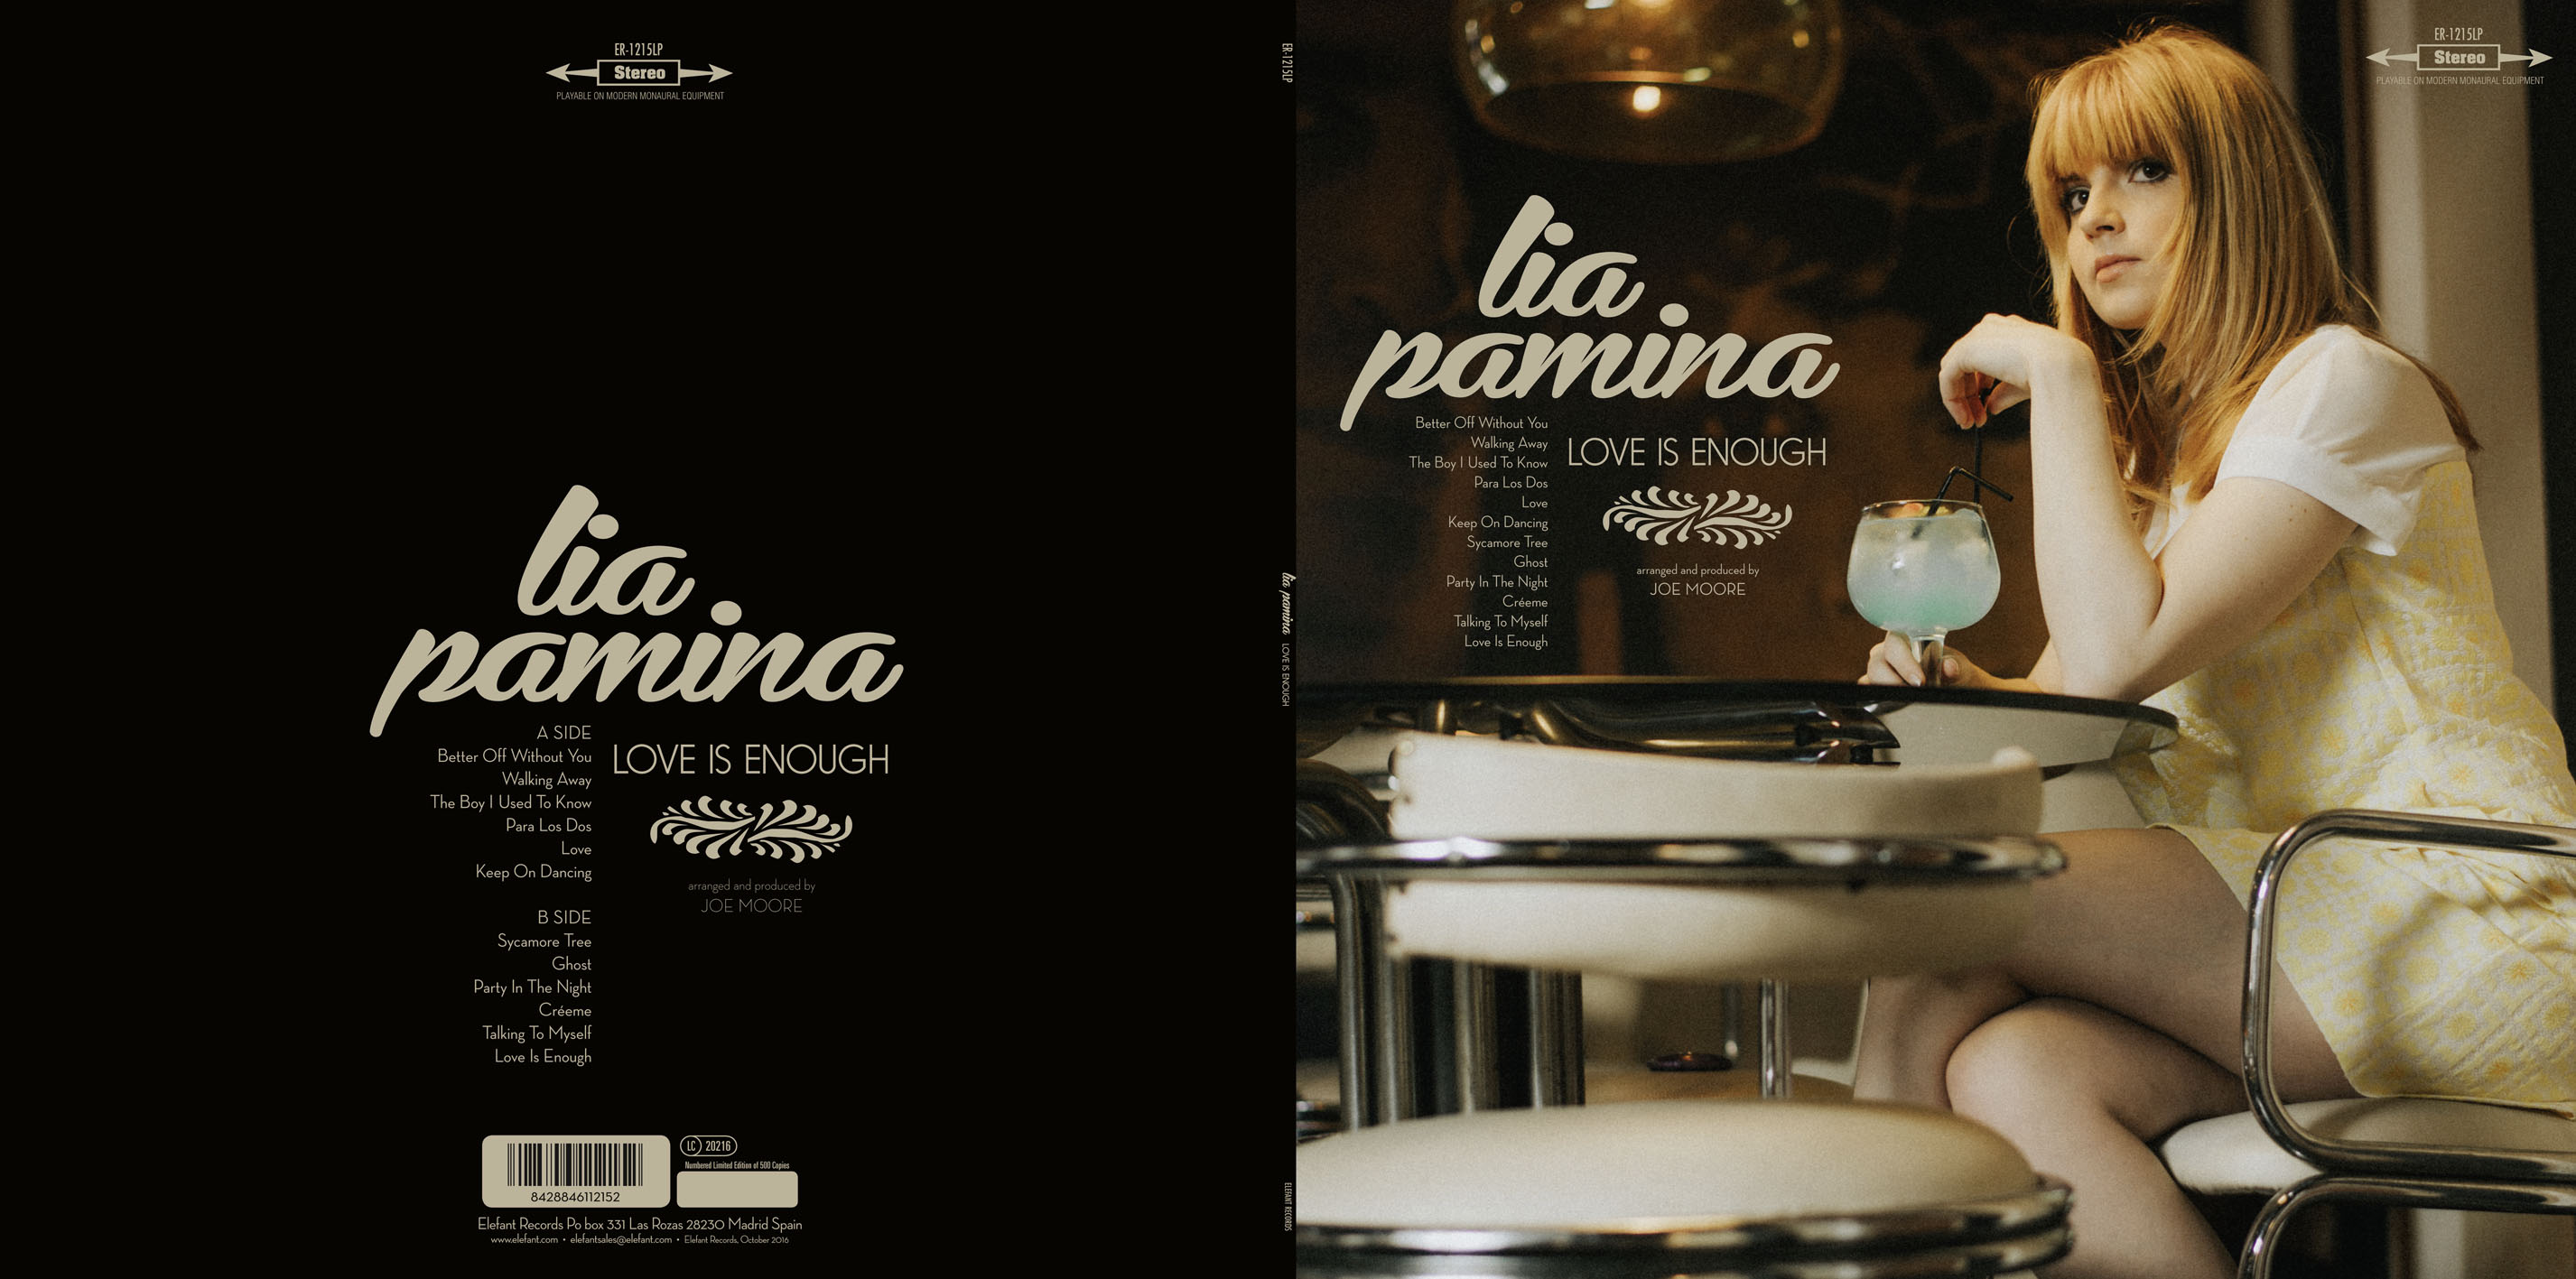 Lia Pamina "Love Is Enough" 